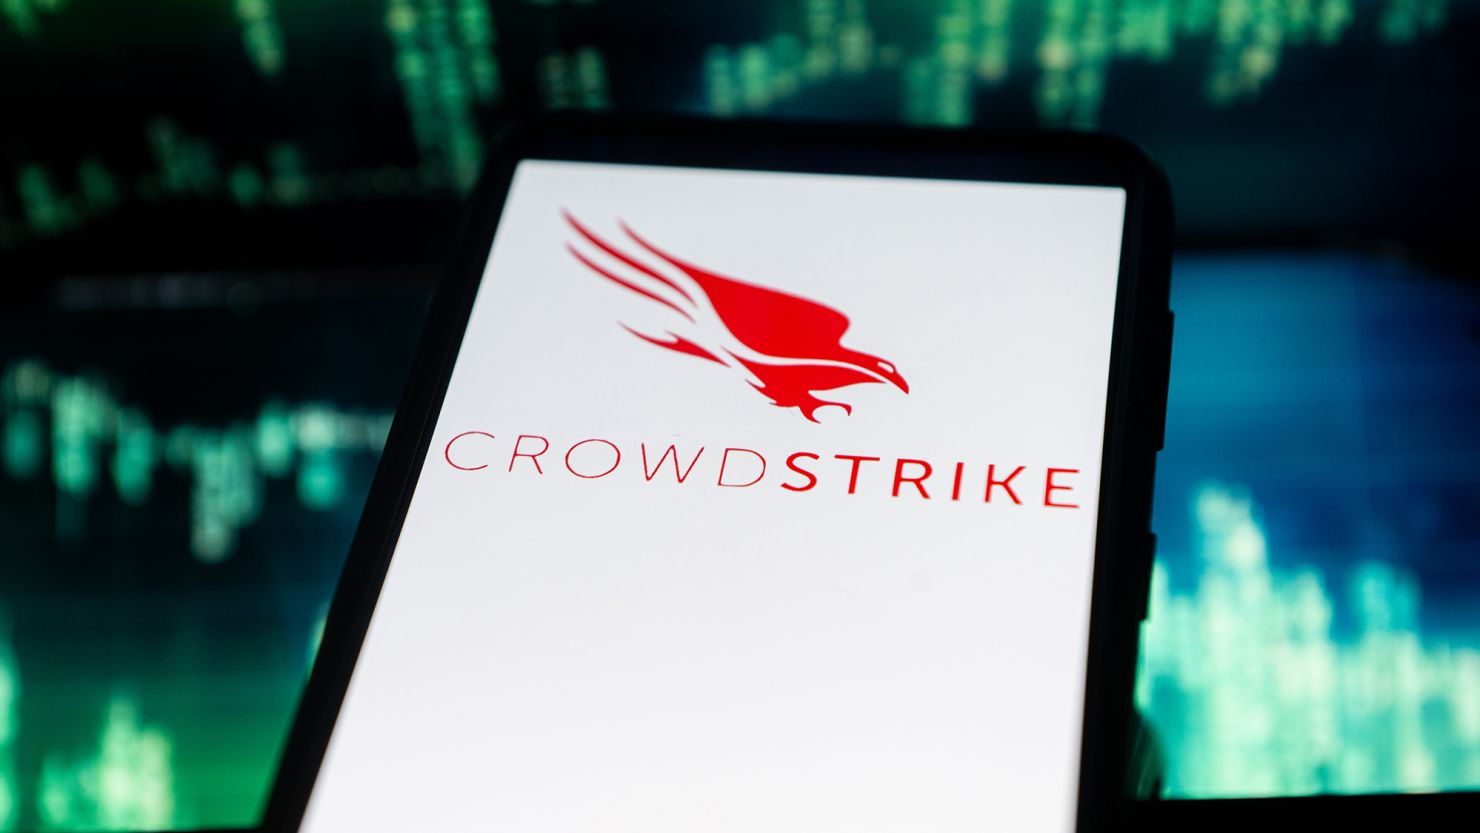 Red Crowdstrike logo on a white backgrownd